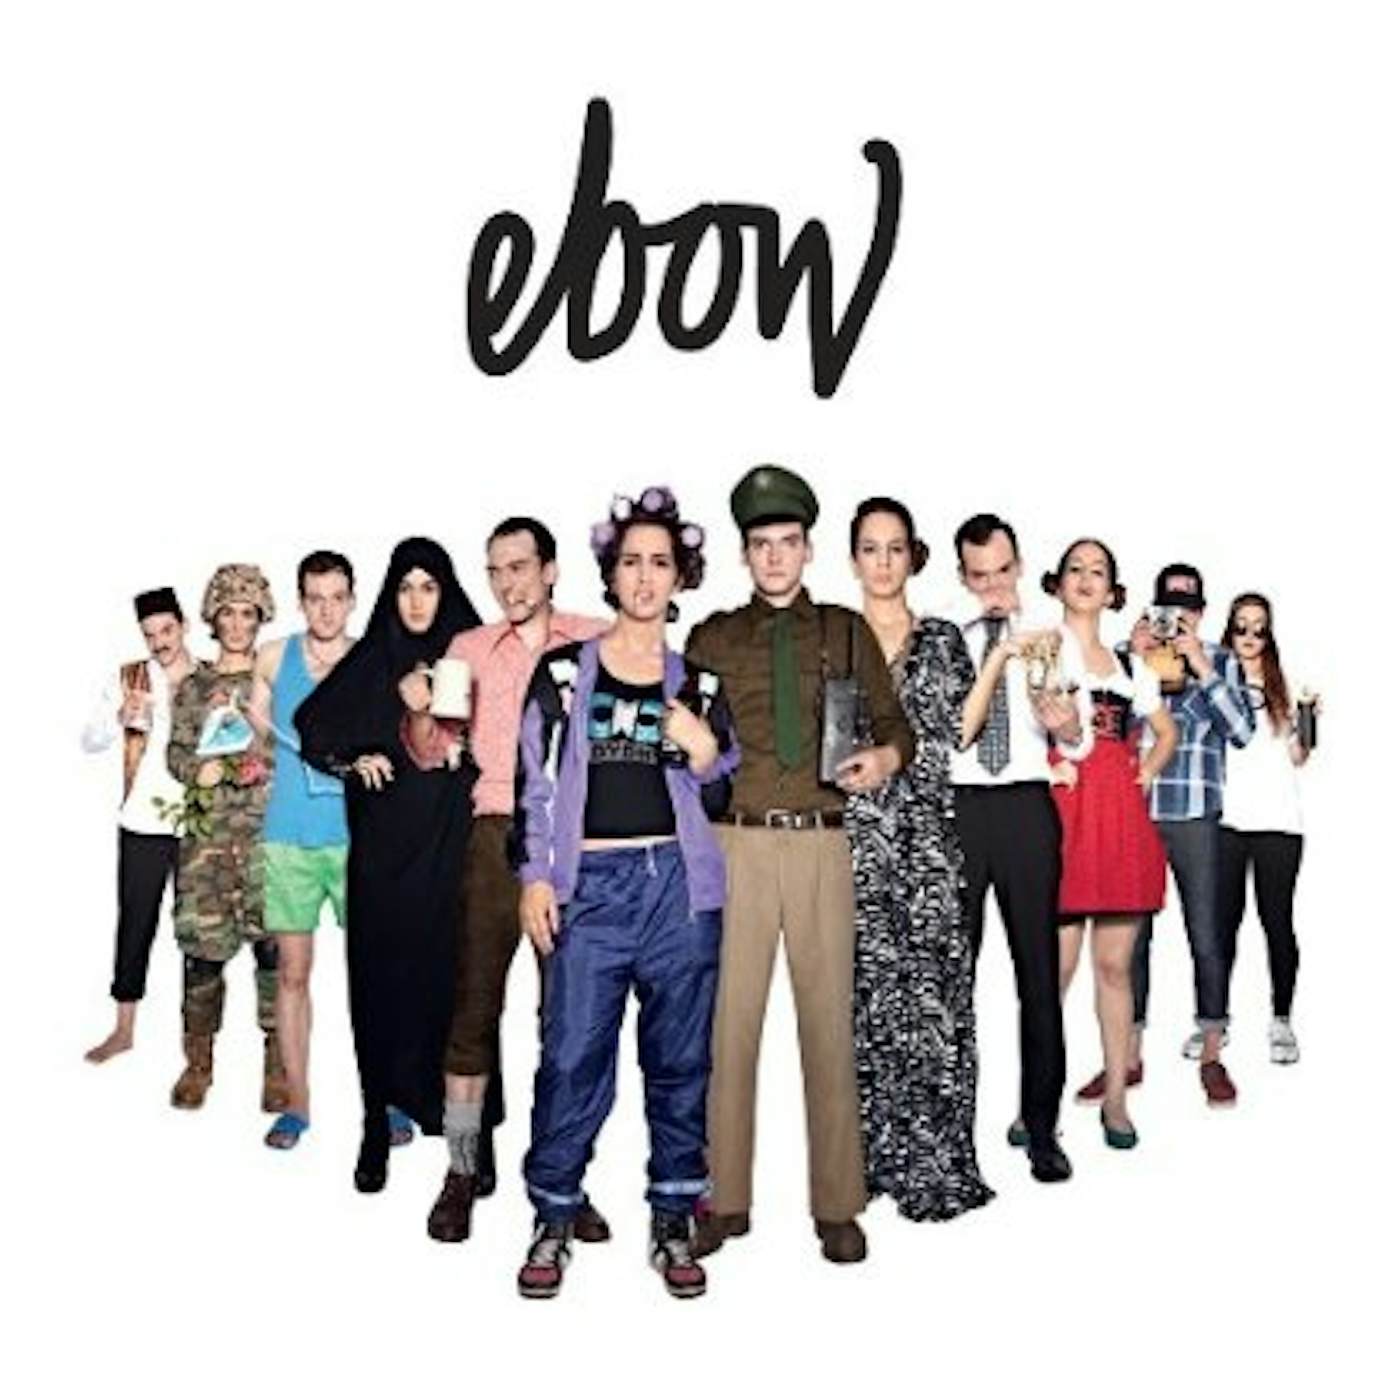 Ebow Vinyl Record